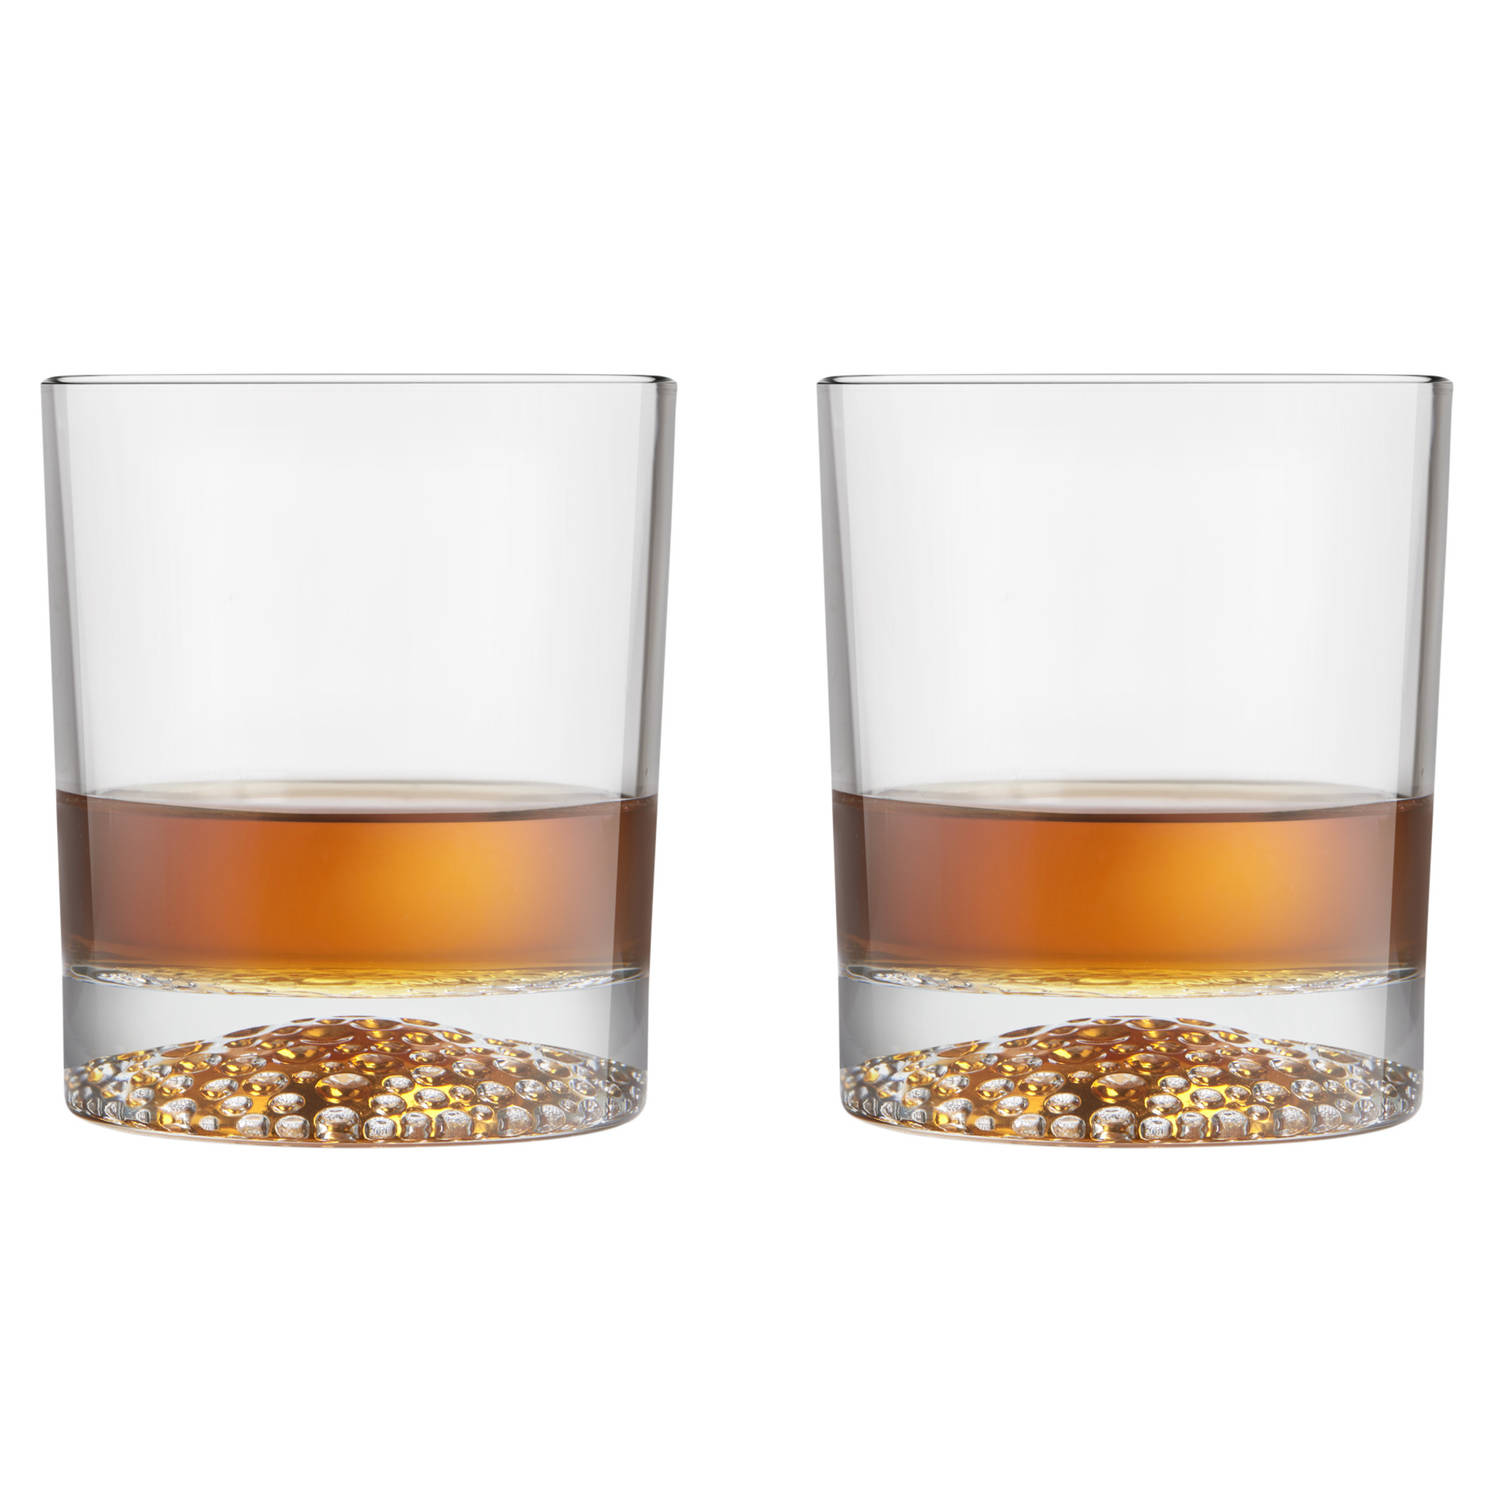 Royal Leerdam Artisan Whisky glazenset (set van 4)